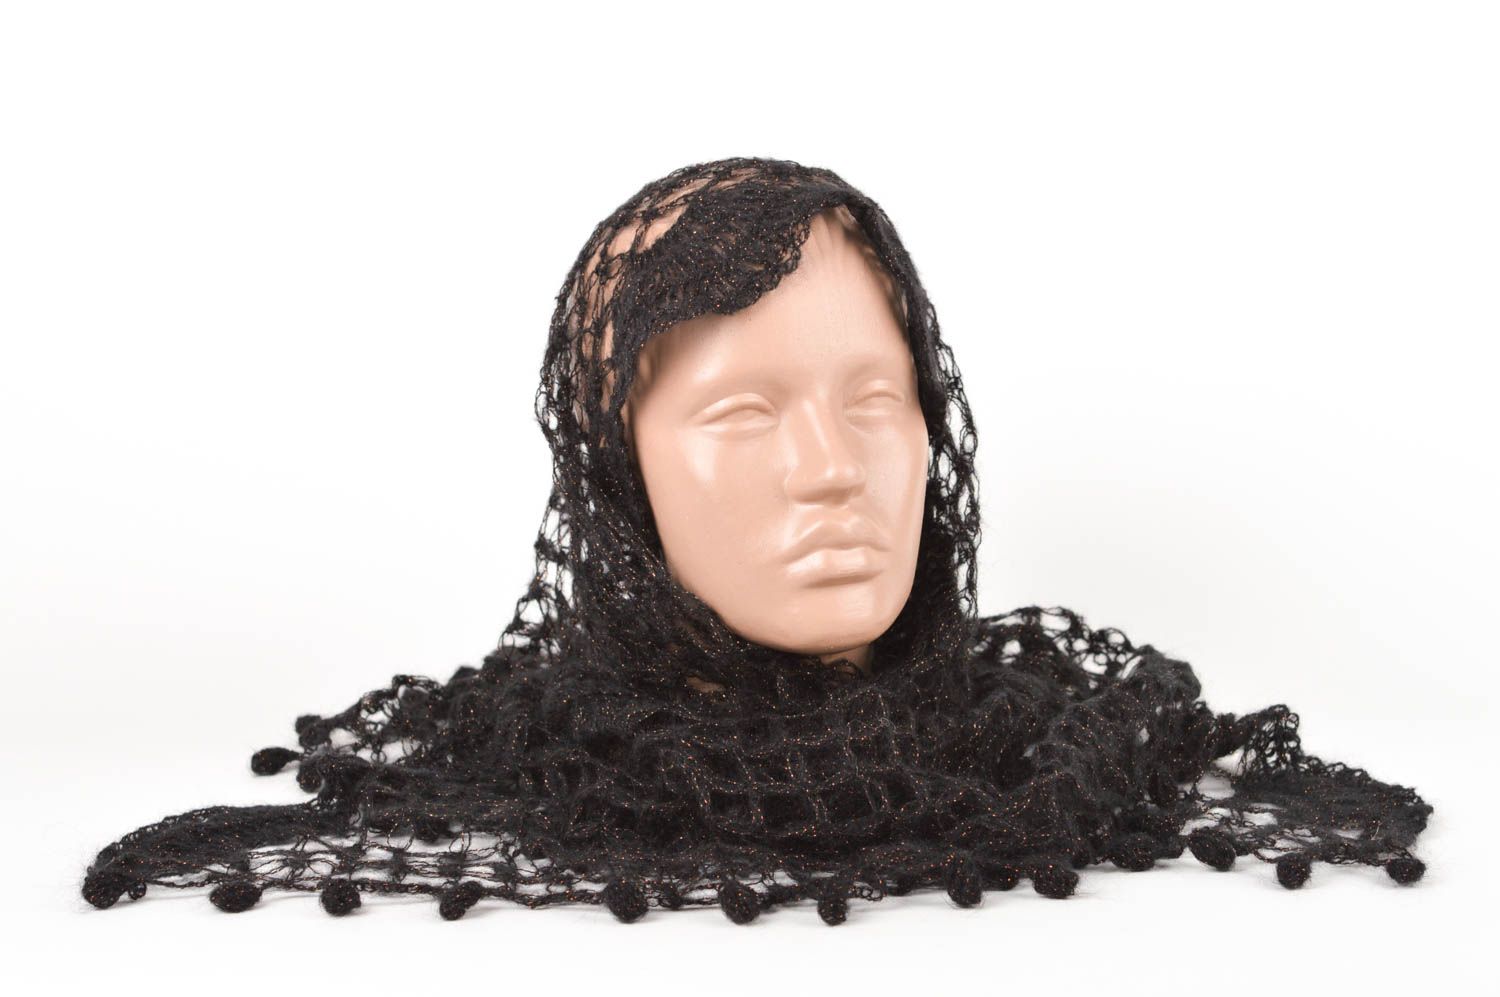 Crochet shawl ladies scarf handmade head scarves designer accessories gift ideas photo 1